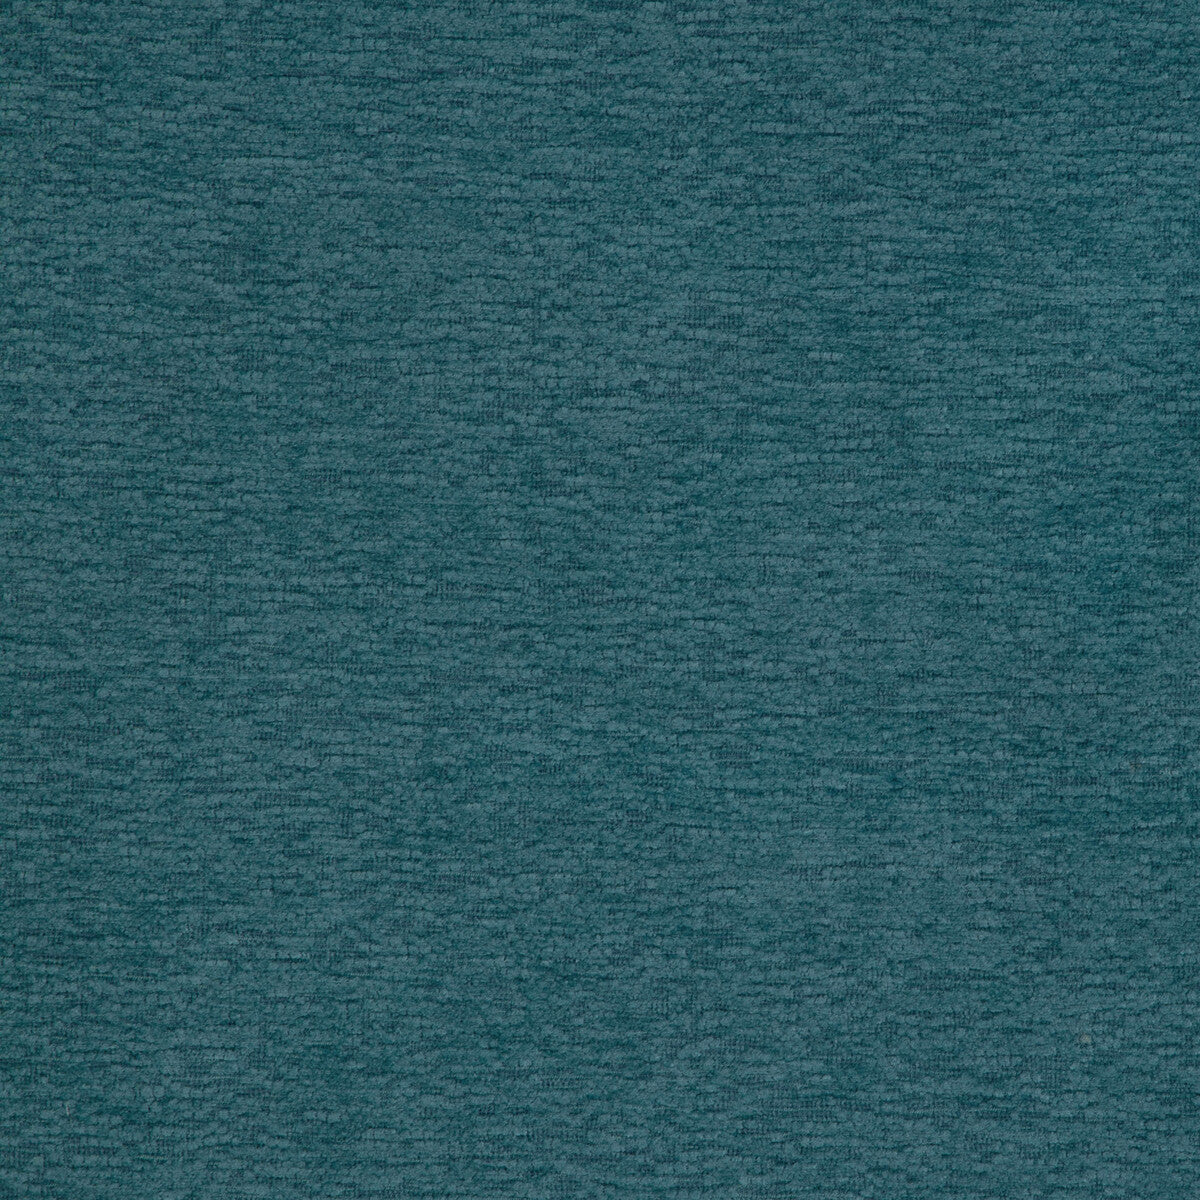 Kravet Smart fabric in 37002-35 color - pattern 37002.35.0 - by Kravet Smart in the Pavilion collection